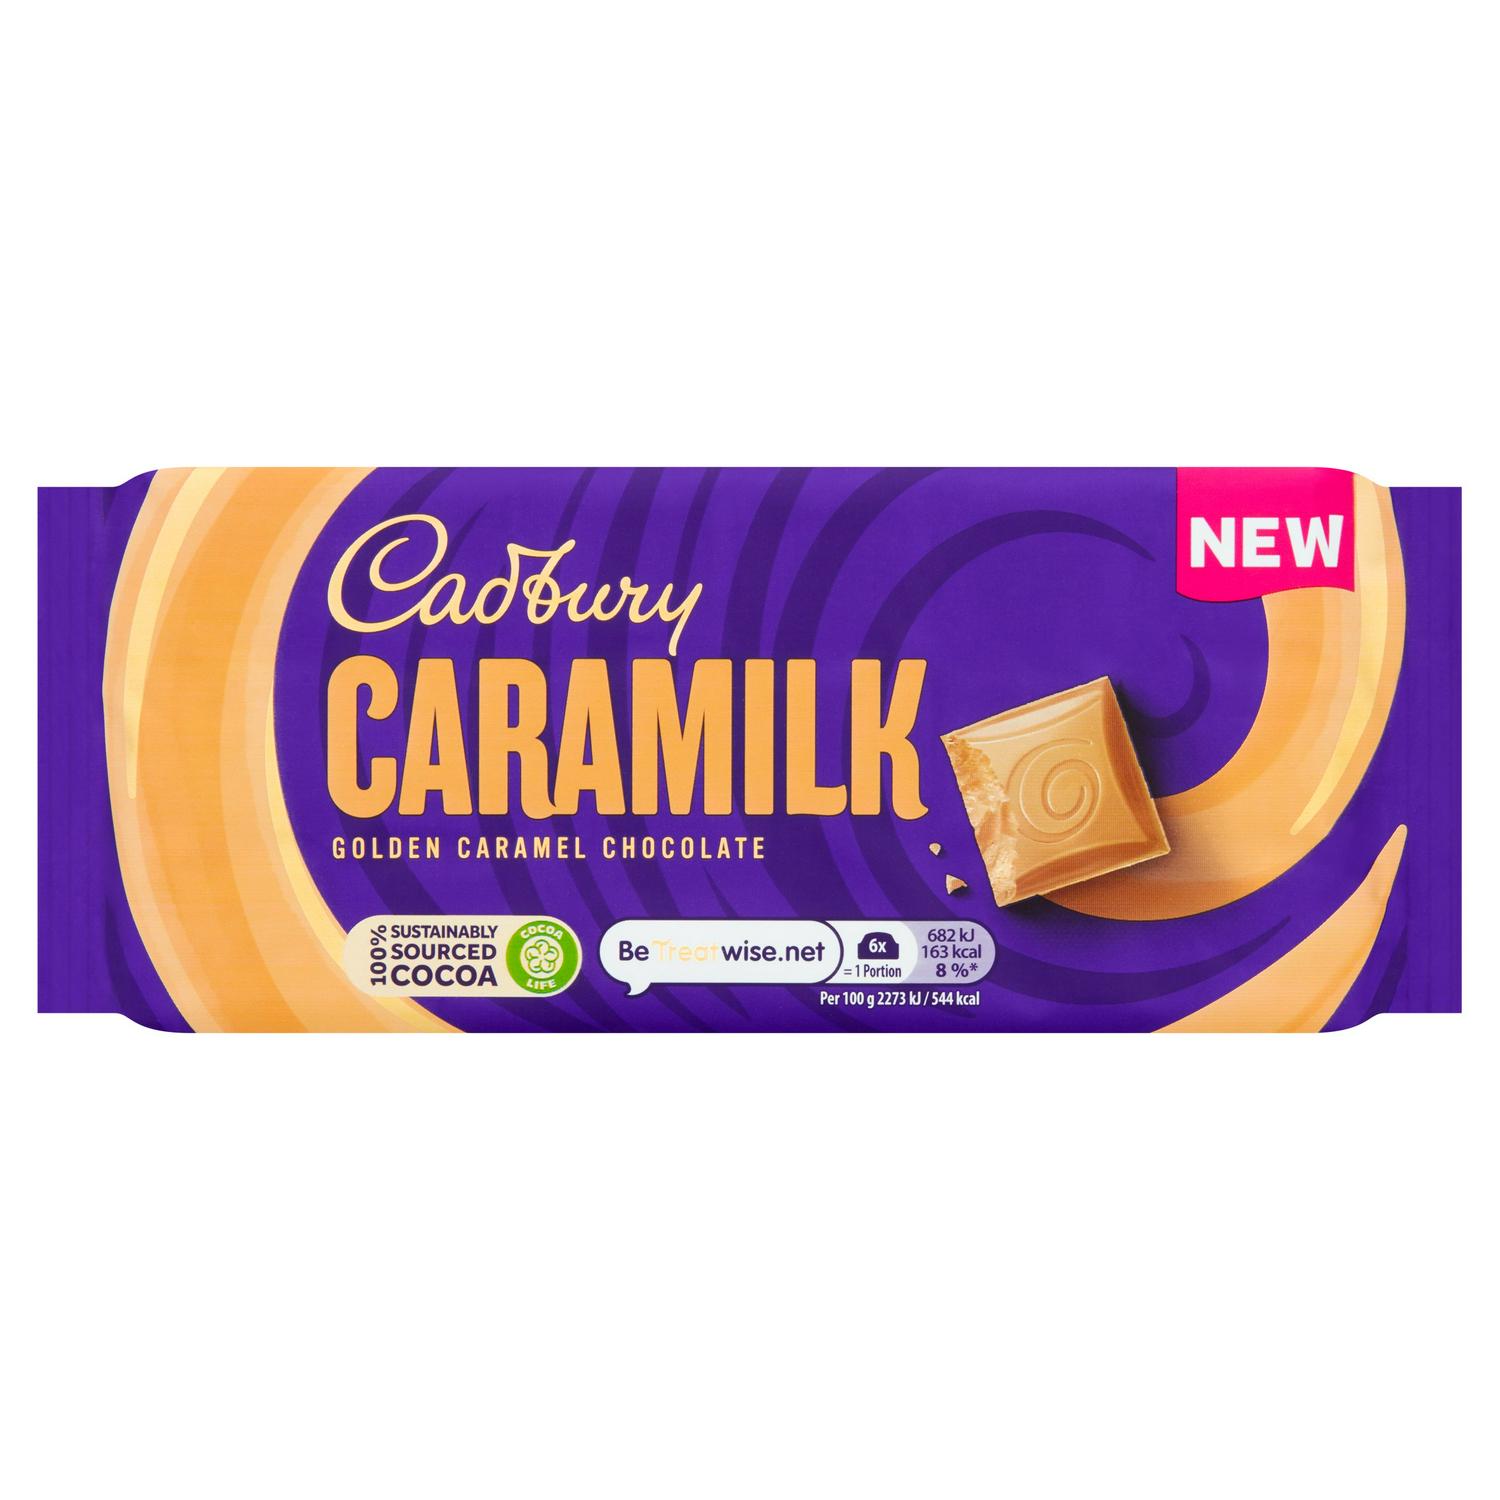 Cadbury Caramilk Golden Caramel Chocolate Bar 90g RRP 1 CLEARANCE XL 99p or 2 for 1.50